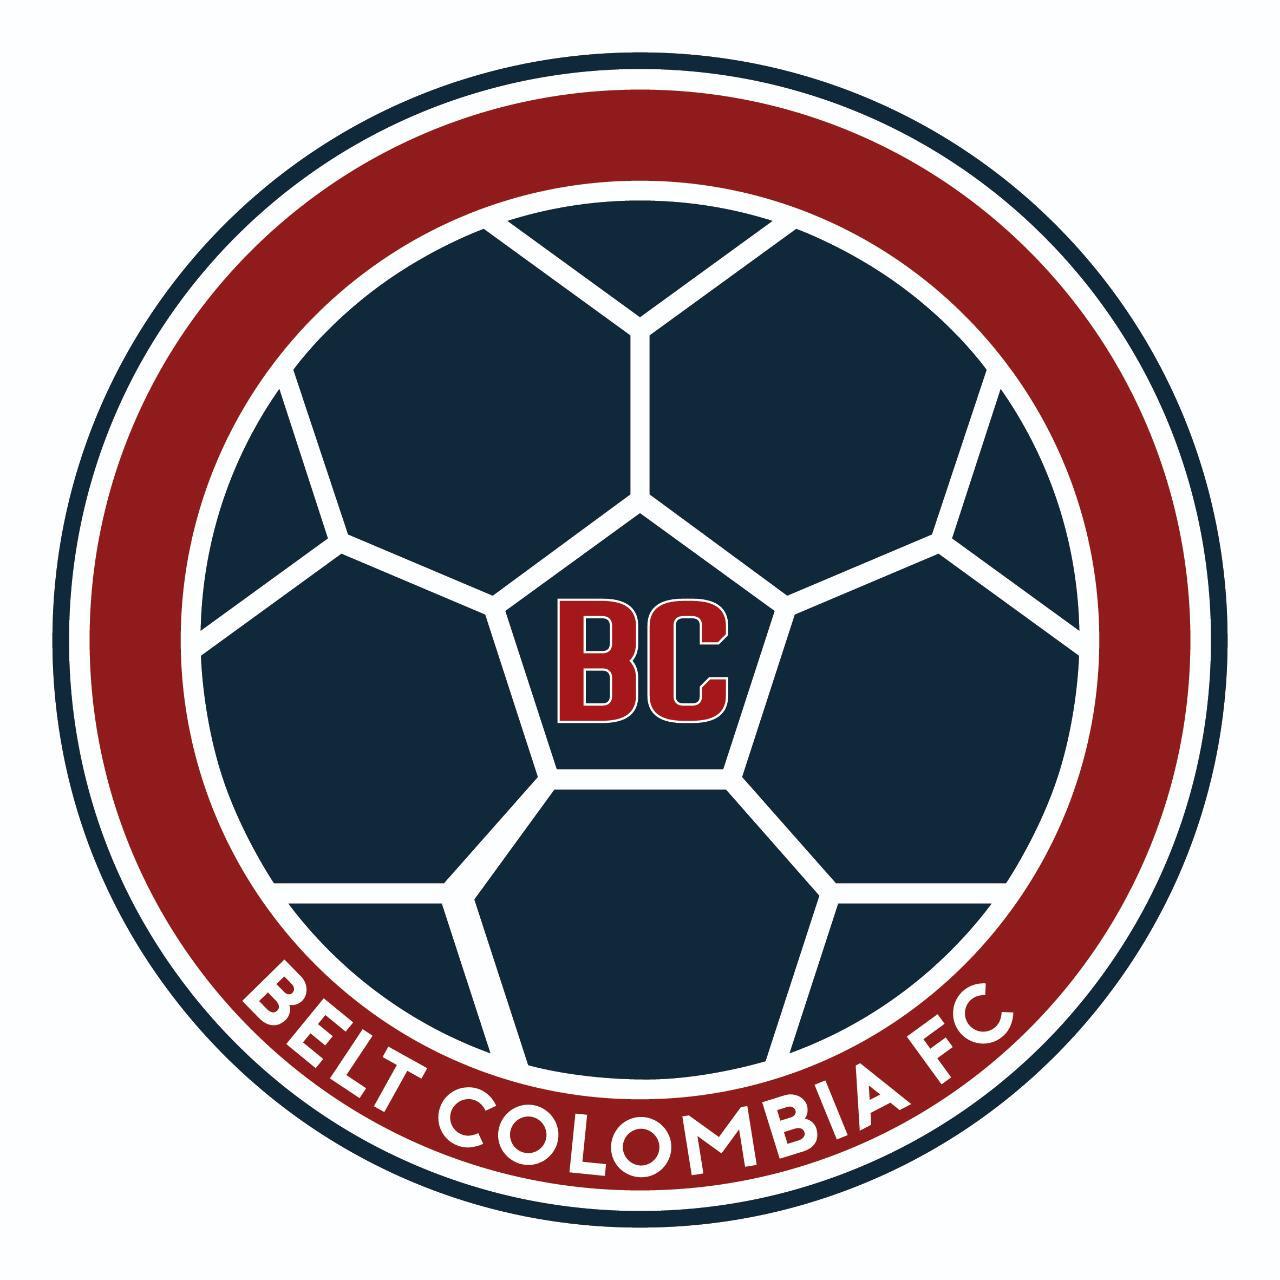 BELT COLOMBIA